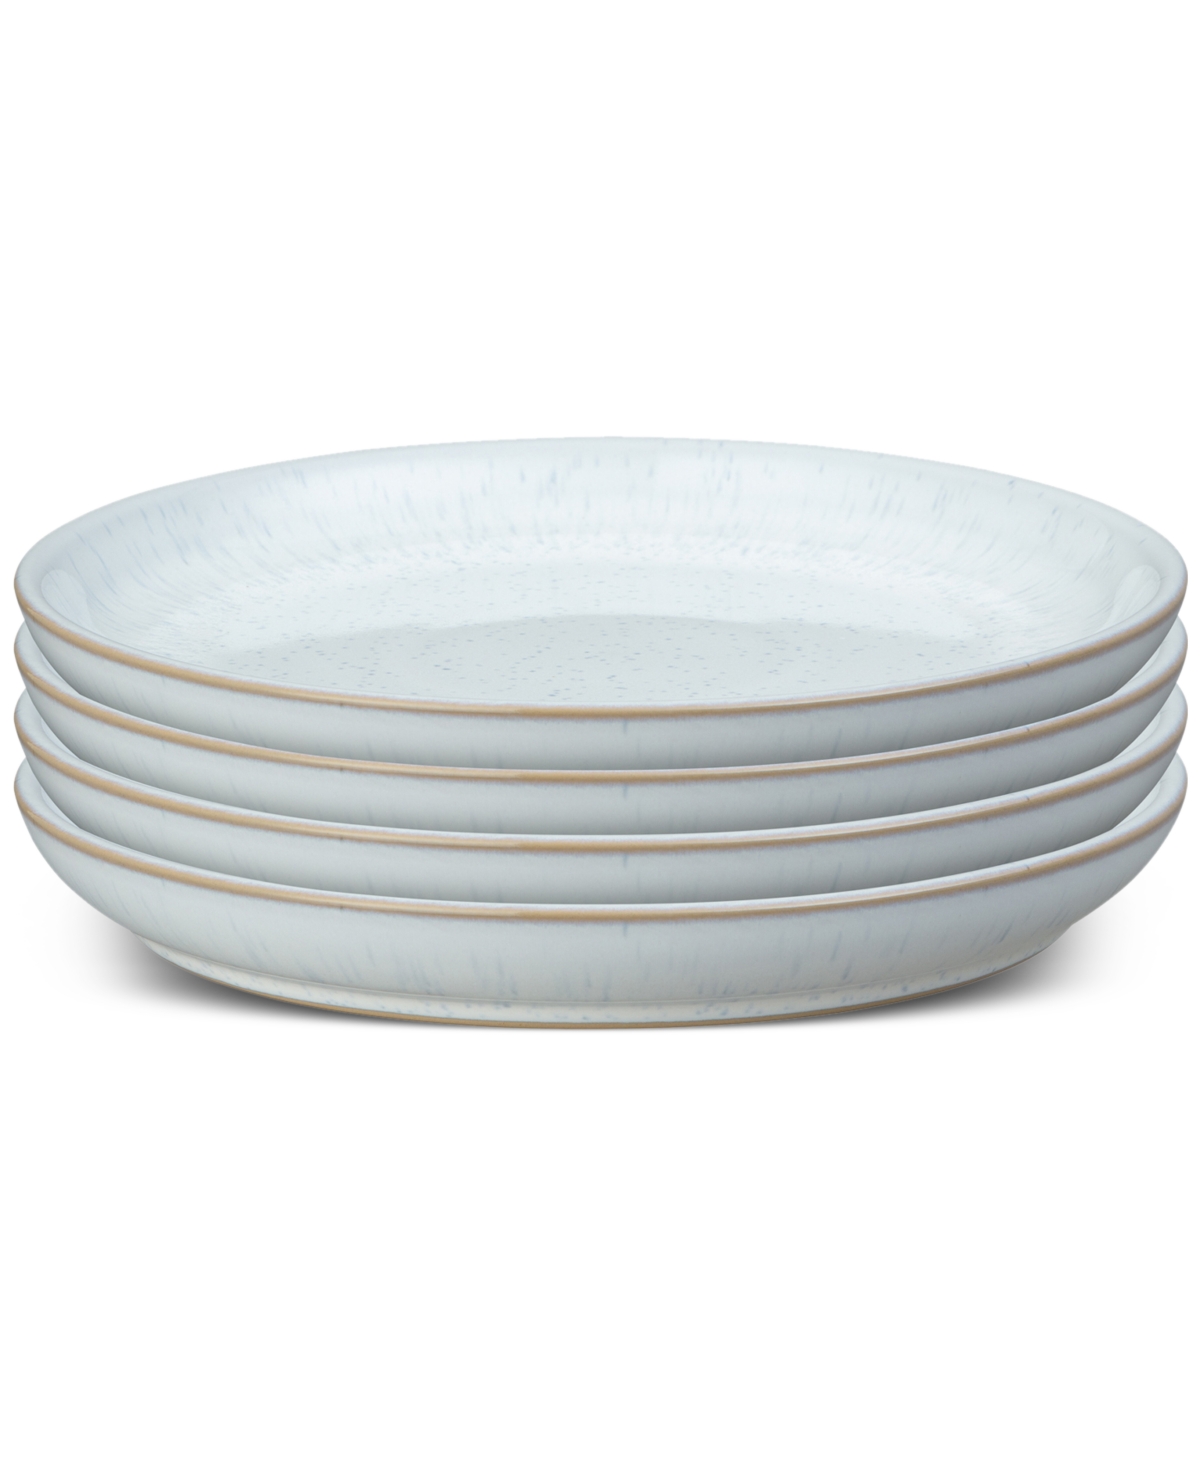 White Speckle Stoneware Coupe Medium Plates, Set of 4 - White